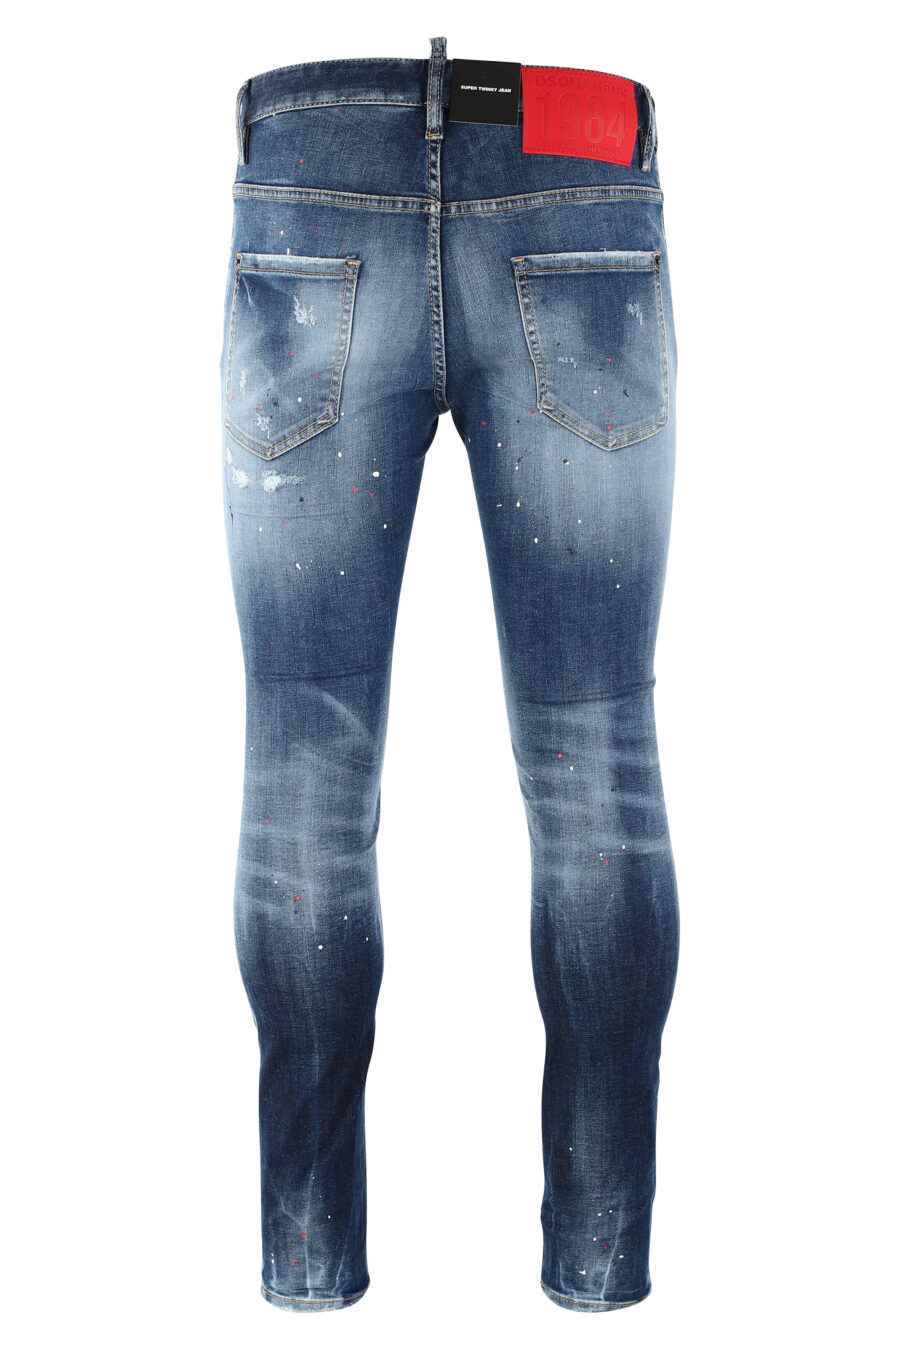 Pantalón vaquero "super twinky jean" azul desgastado con rotos - IMG 9667